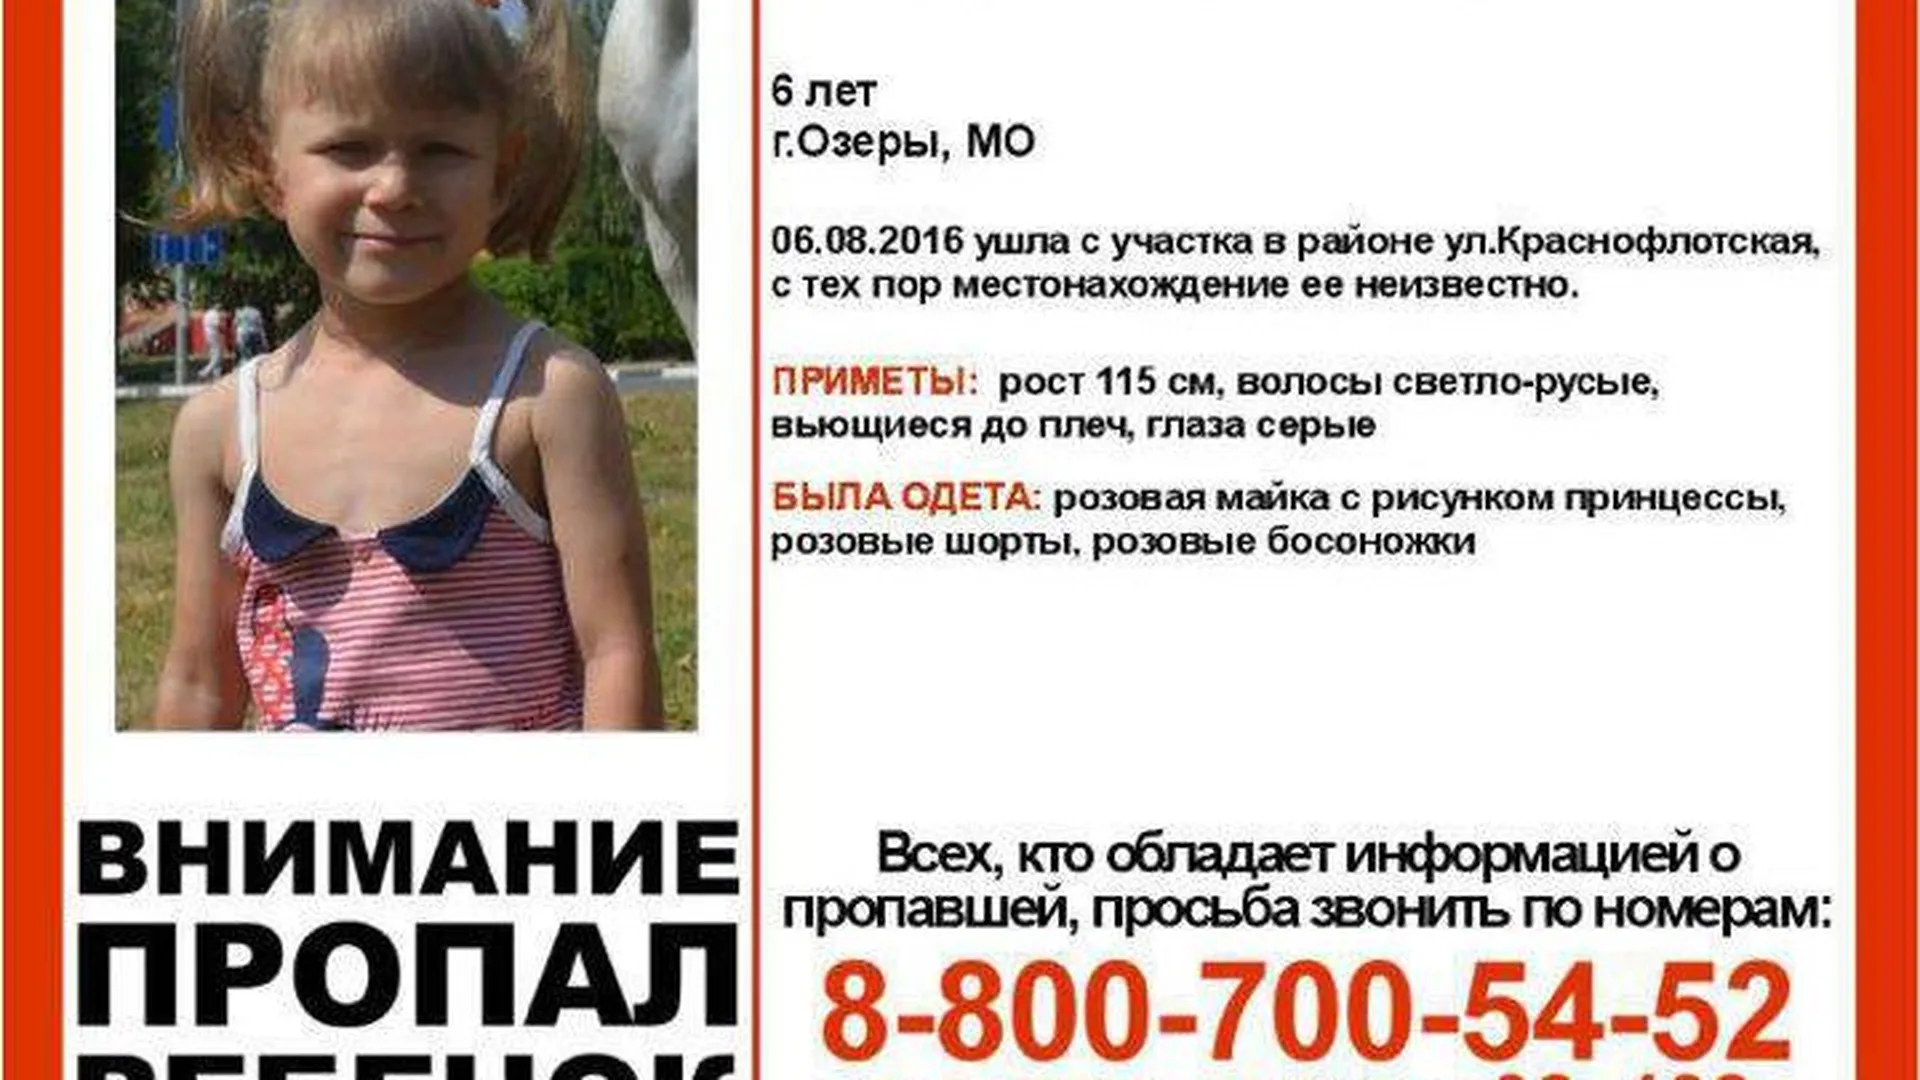 Шестилетняя девочка пропала в Озерах